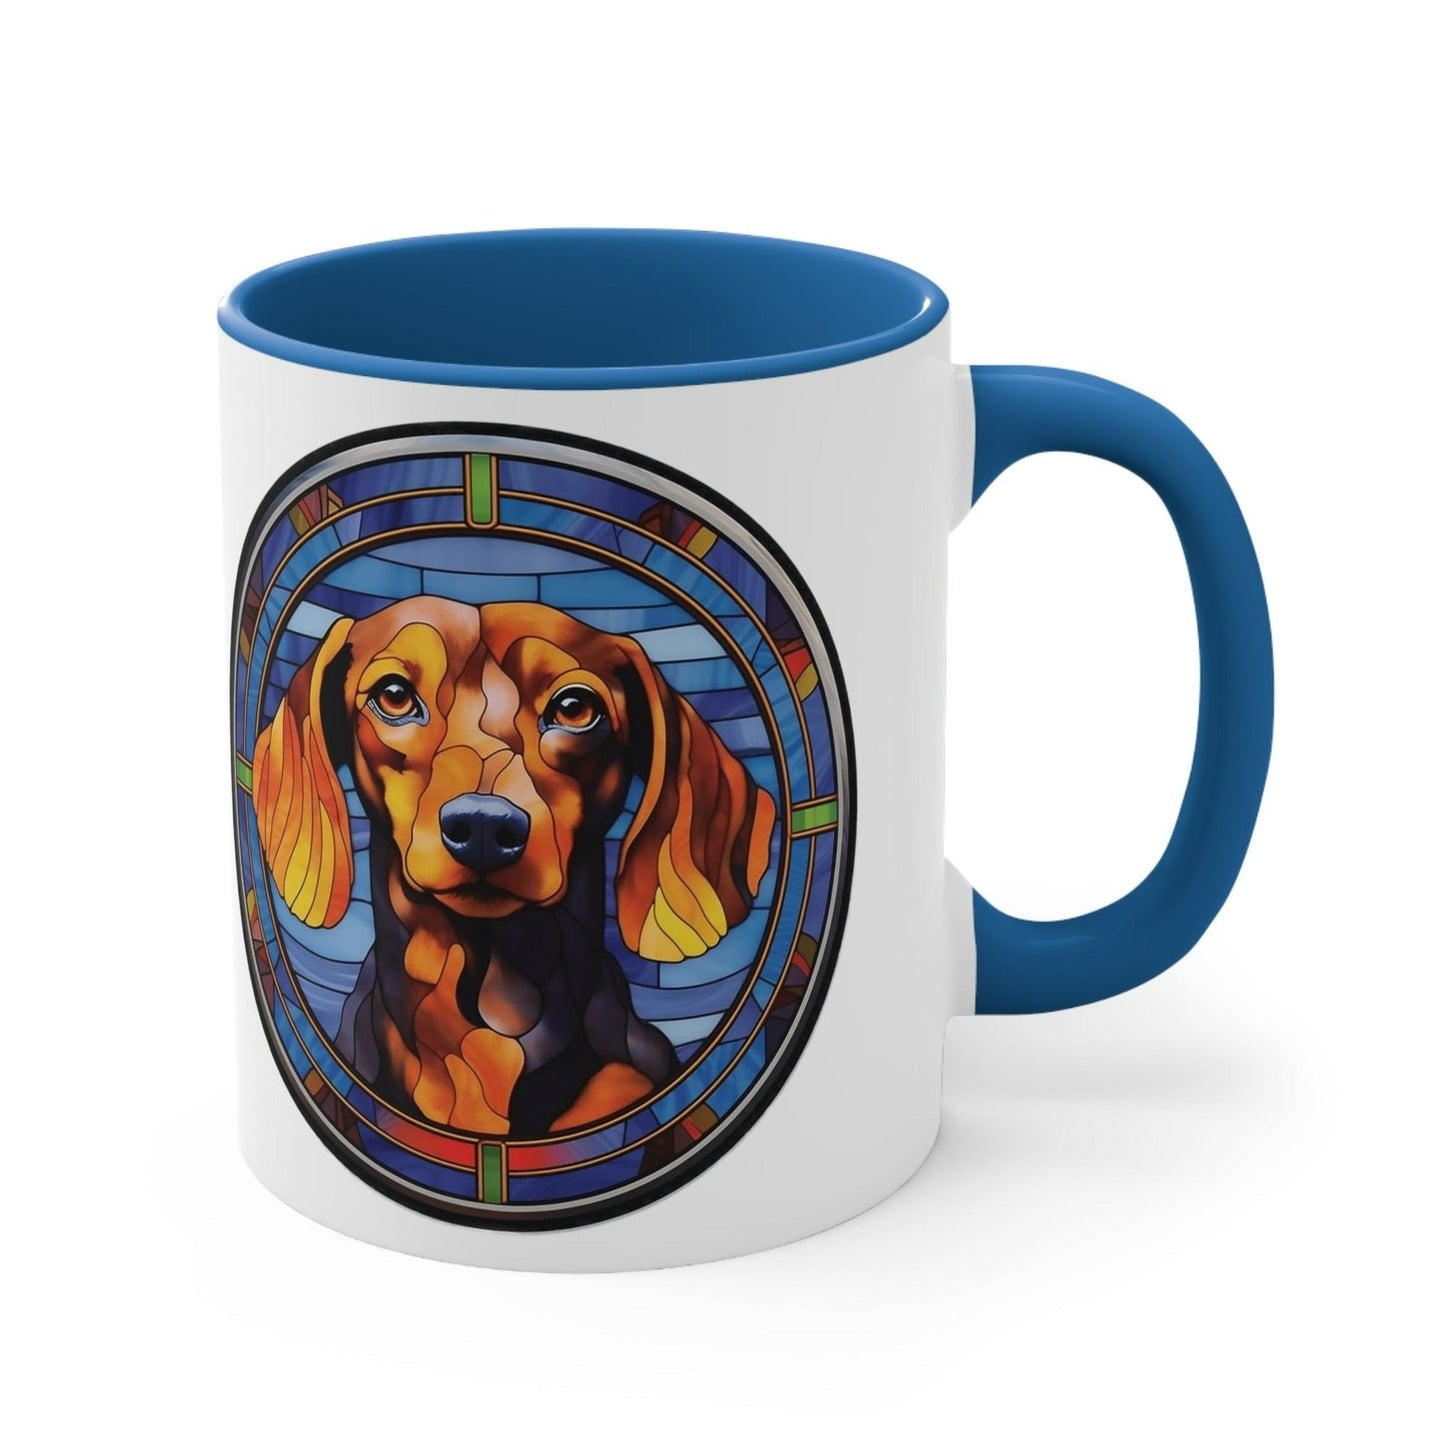 DACHSHUND MUG - Dog Breeds Mugs - Red,Blue, Navy and Black Accents - MUGSCITY - Free Shipping